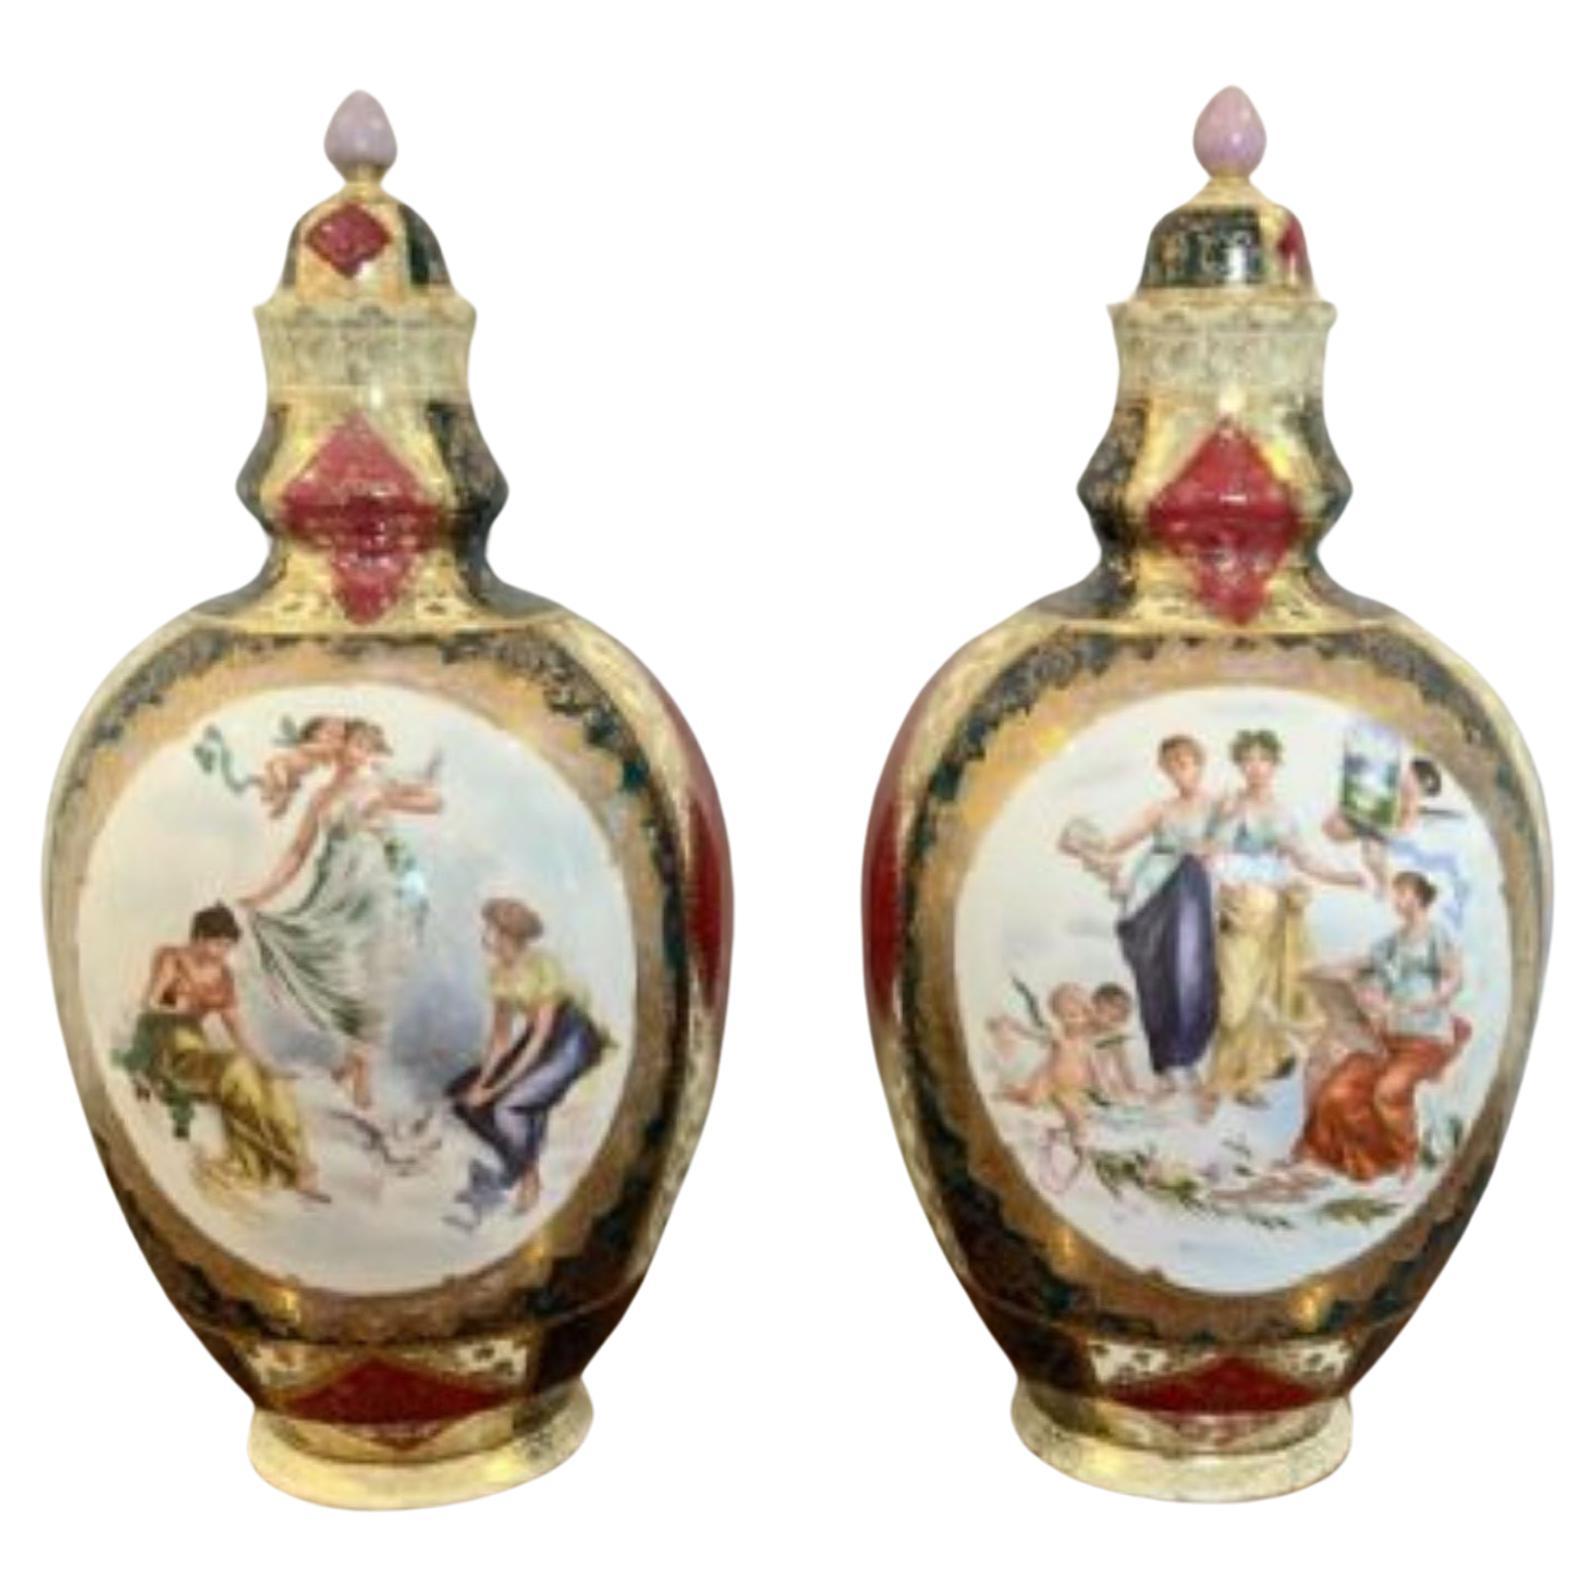 Wonderful pair of antique Victorian quality porcelain lidded vases